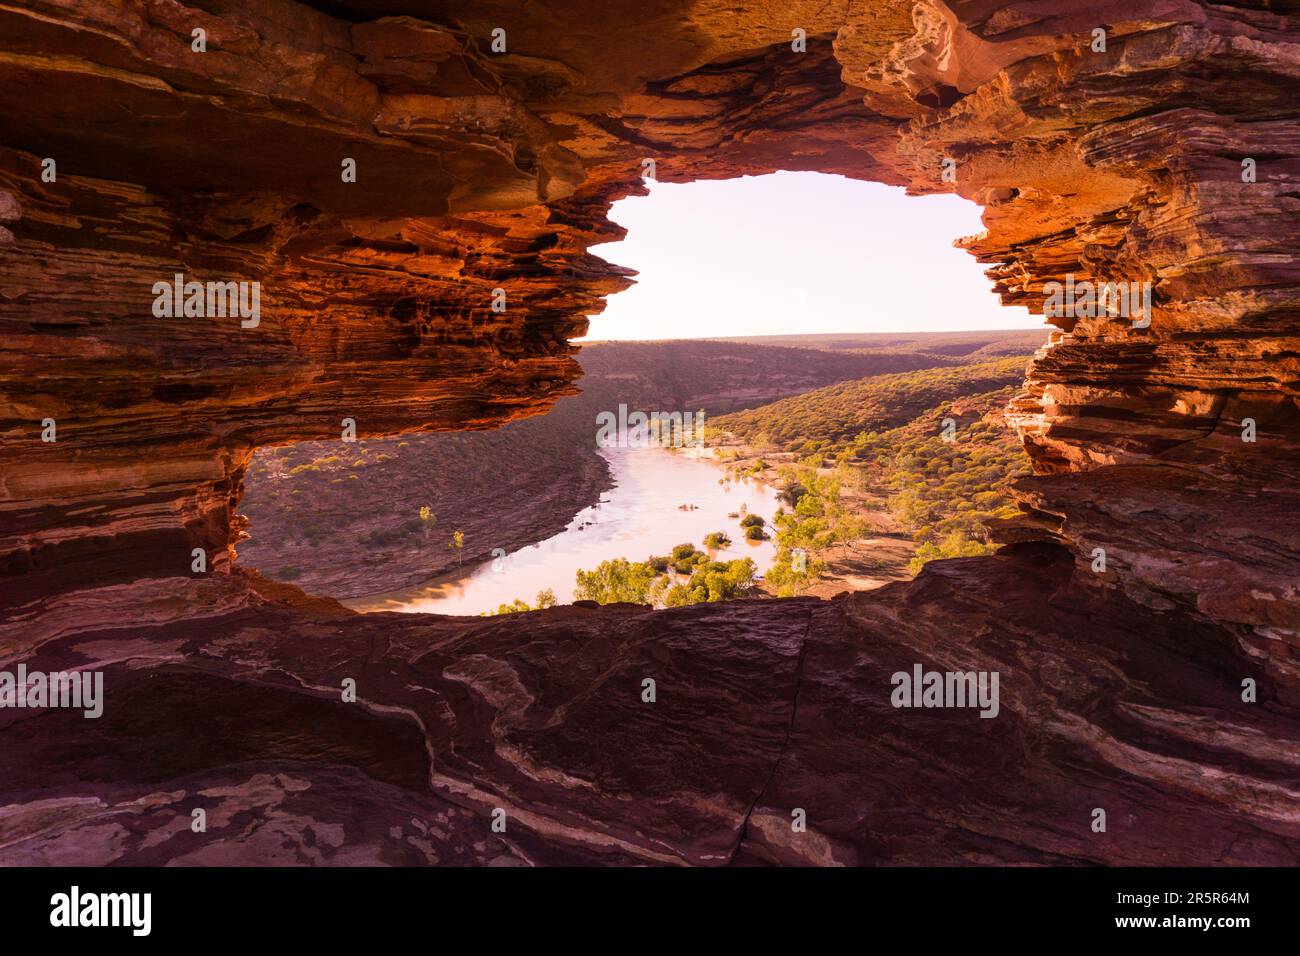 A view through the window bridge at the Murchison River near Kalbarri, Western Australia. Stock Photo